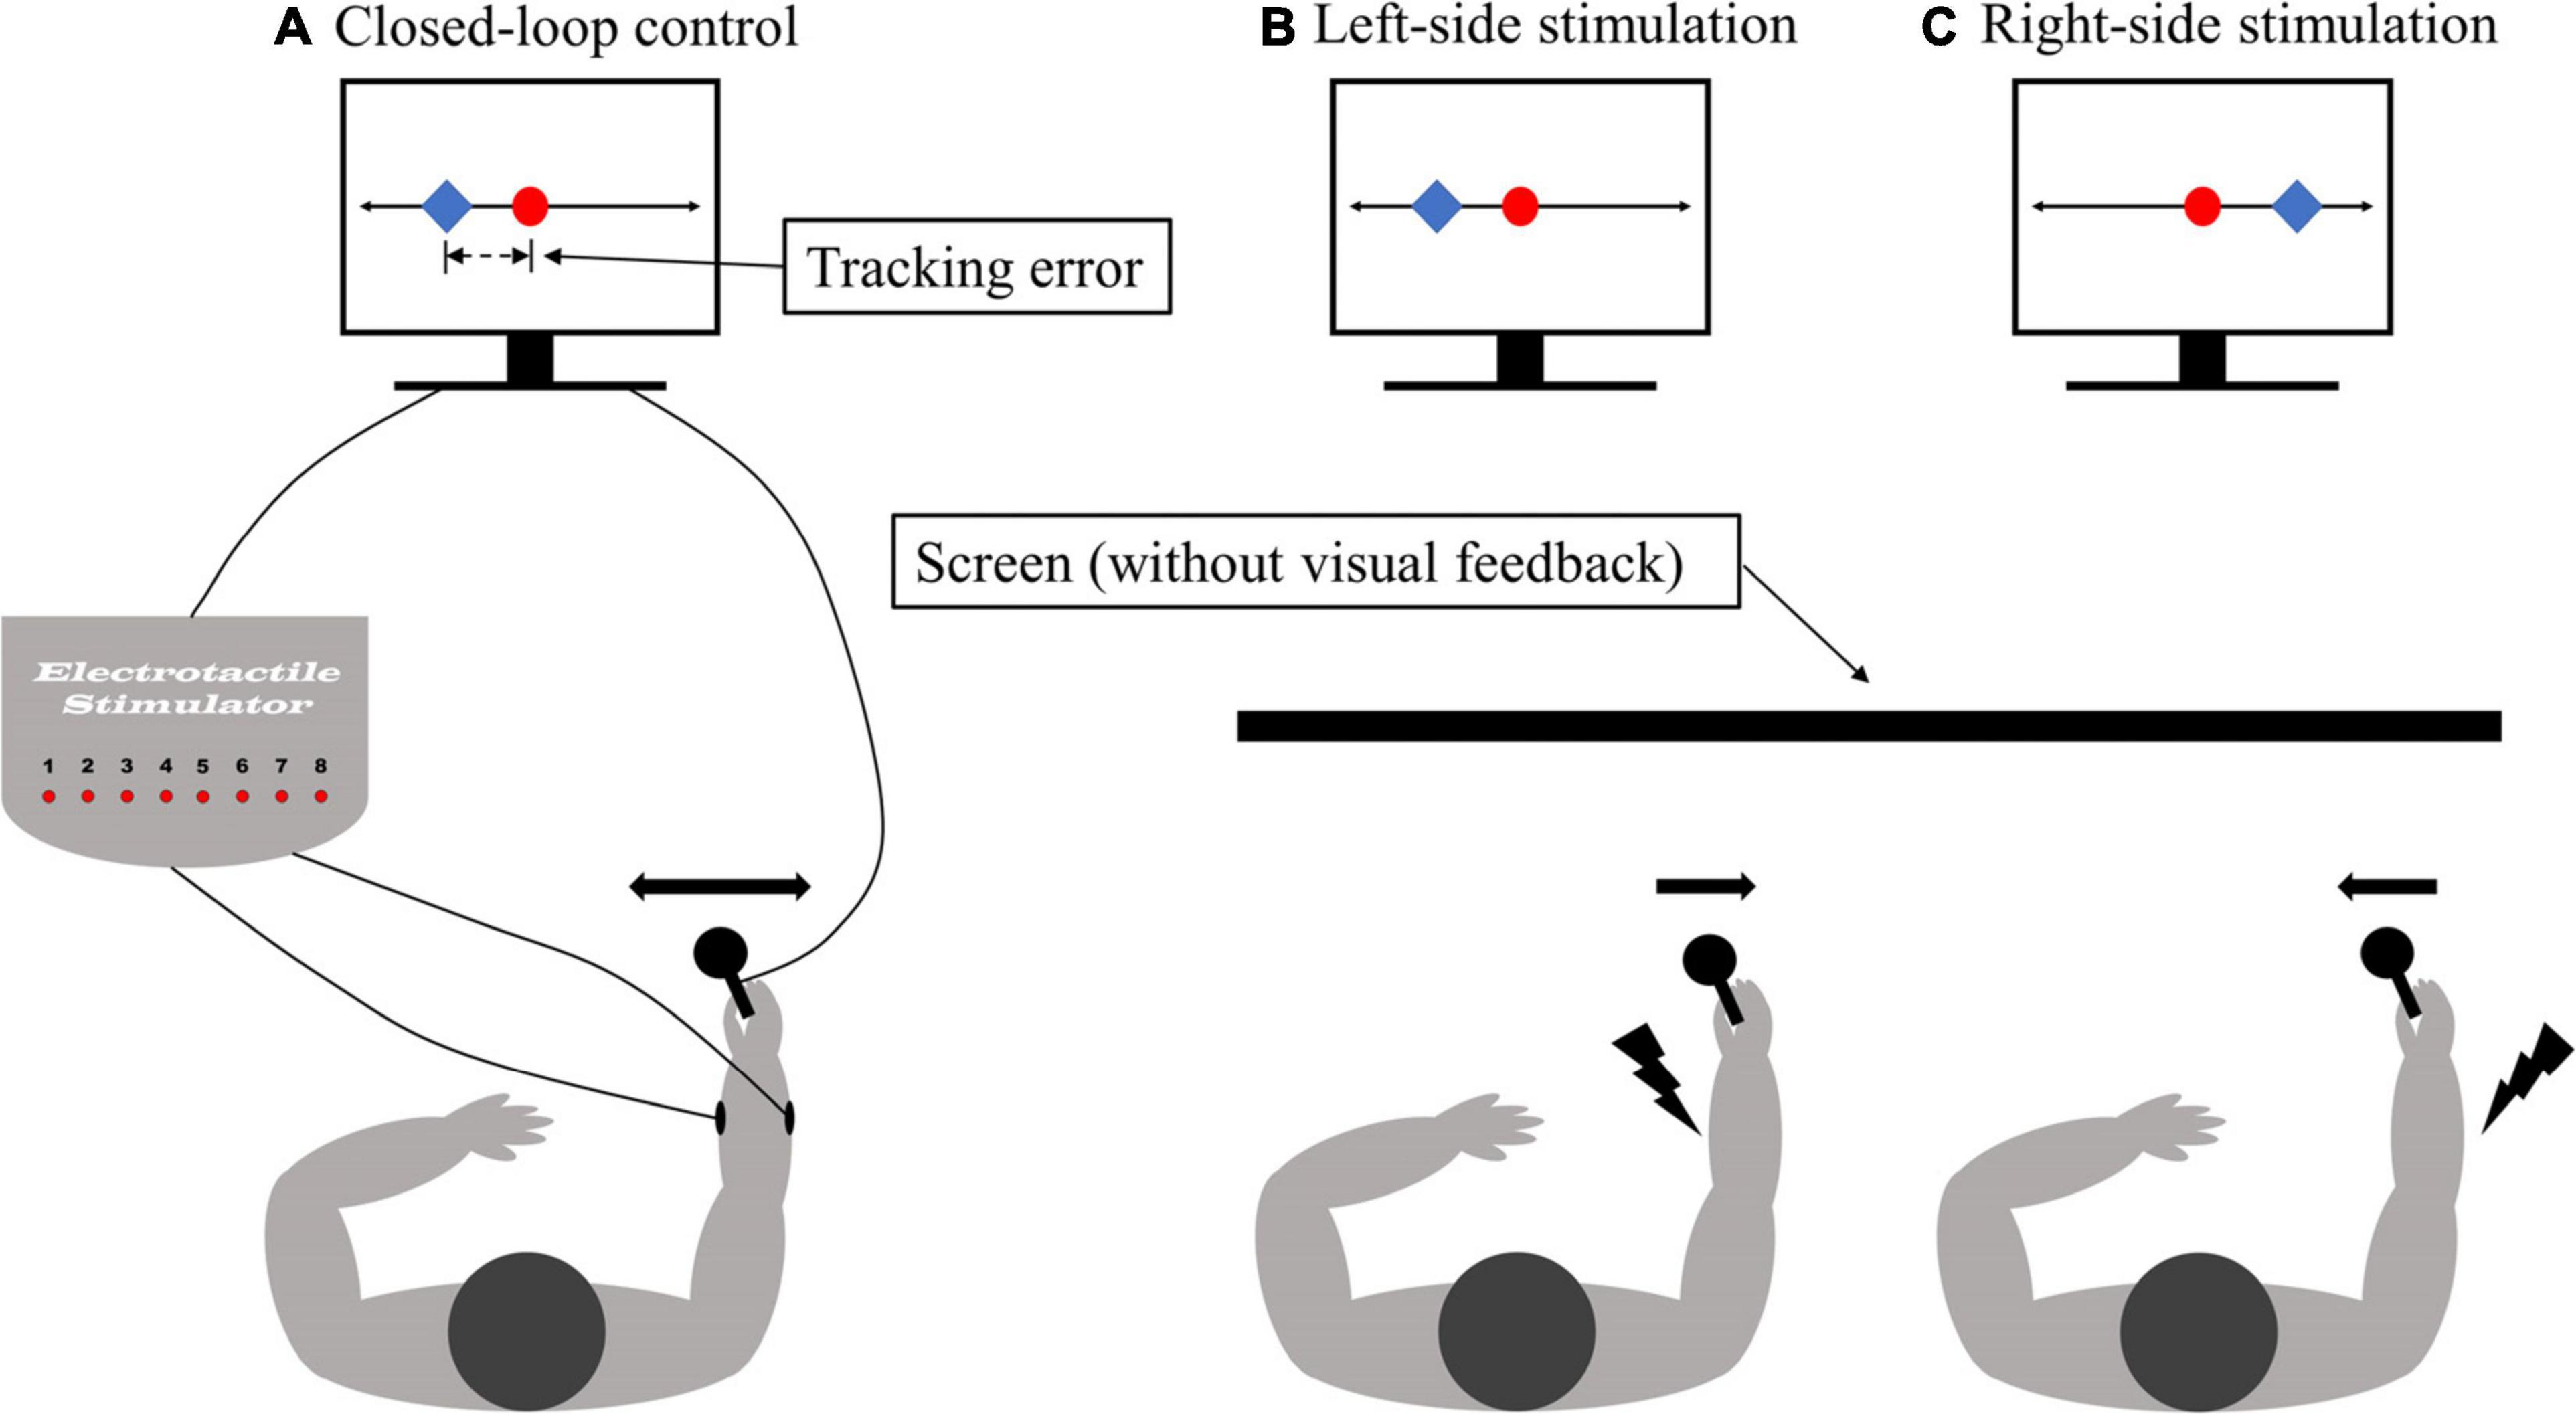 Targeted transcutaneous electrical nerve stimulation for phantom limb  sensory feedback